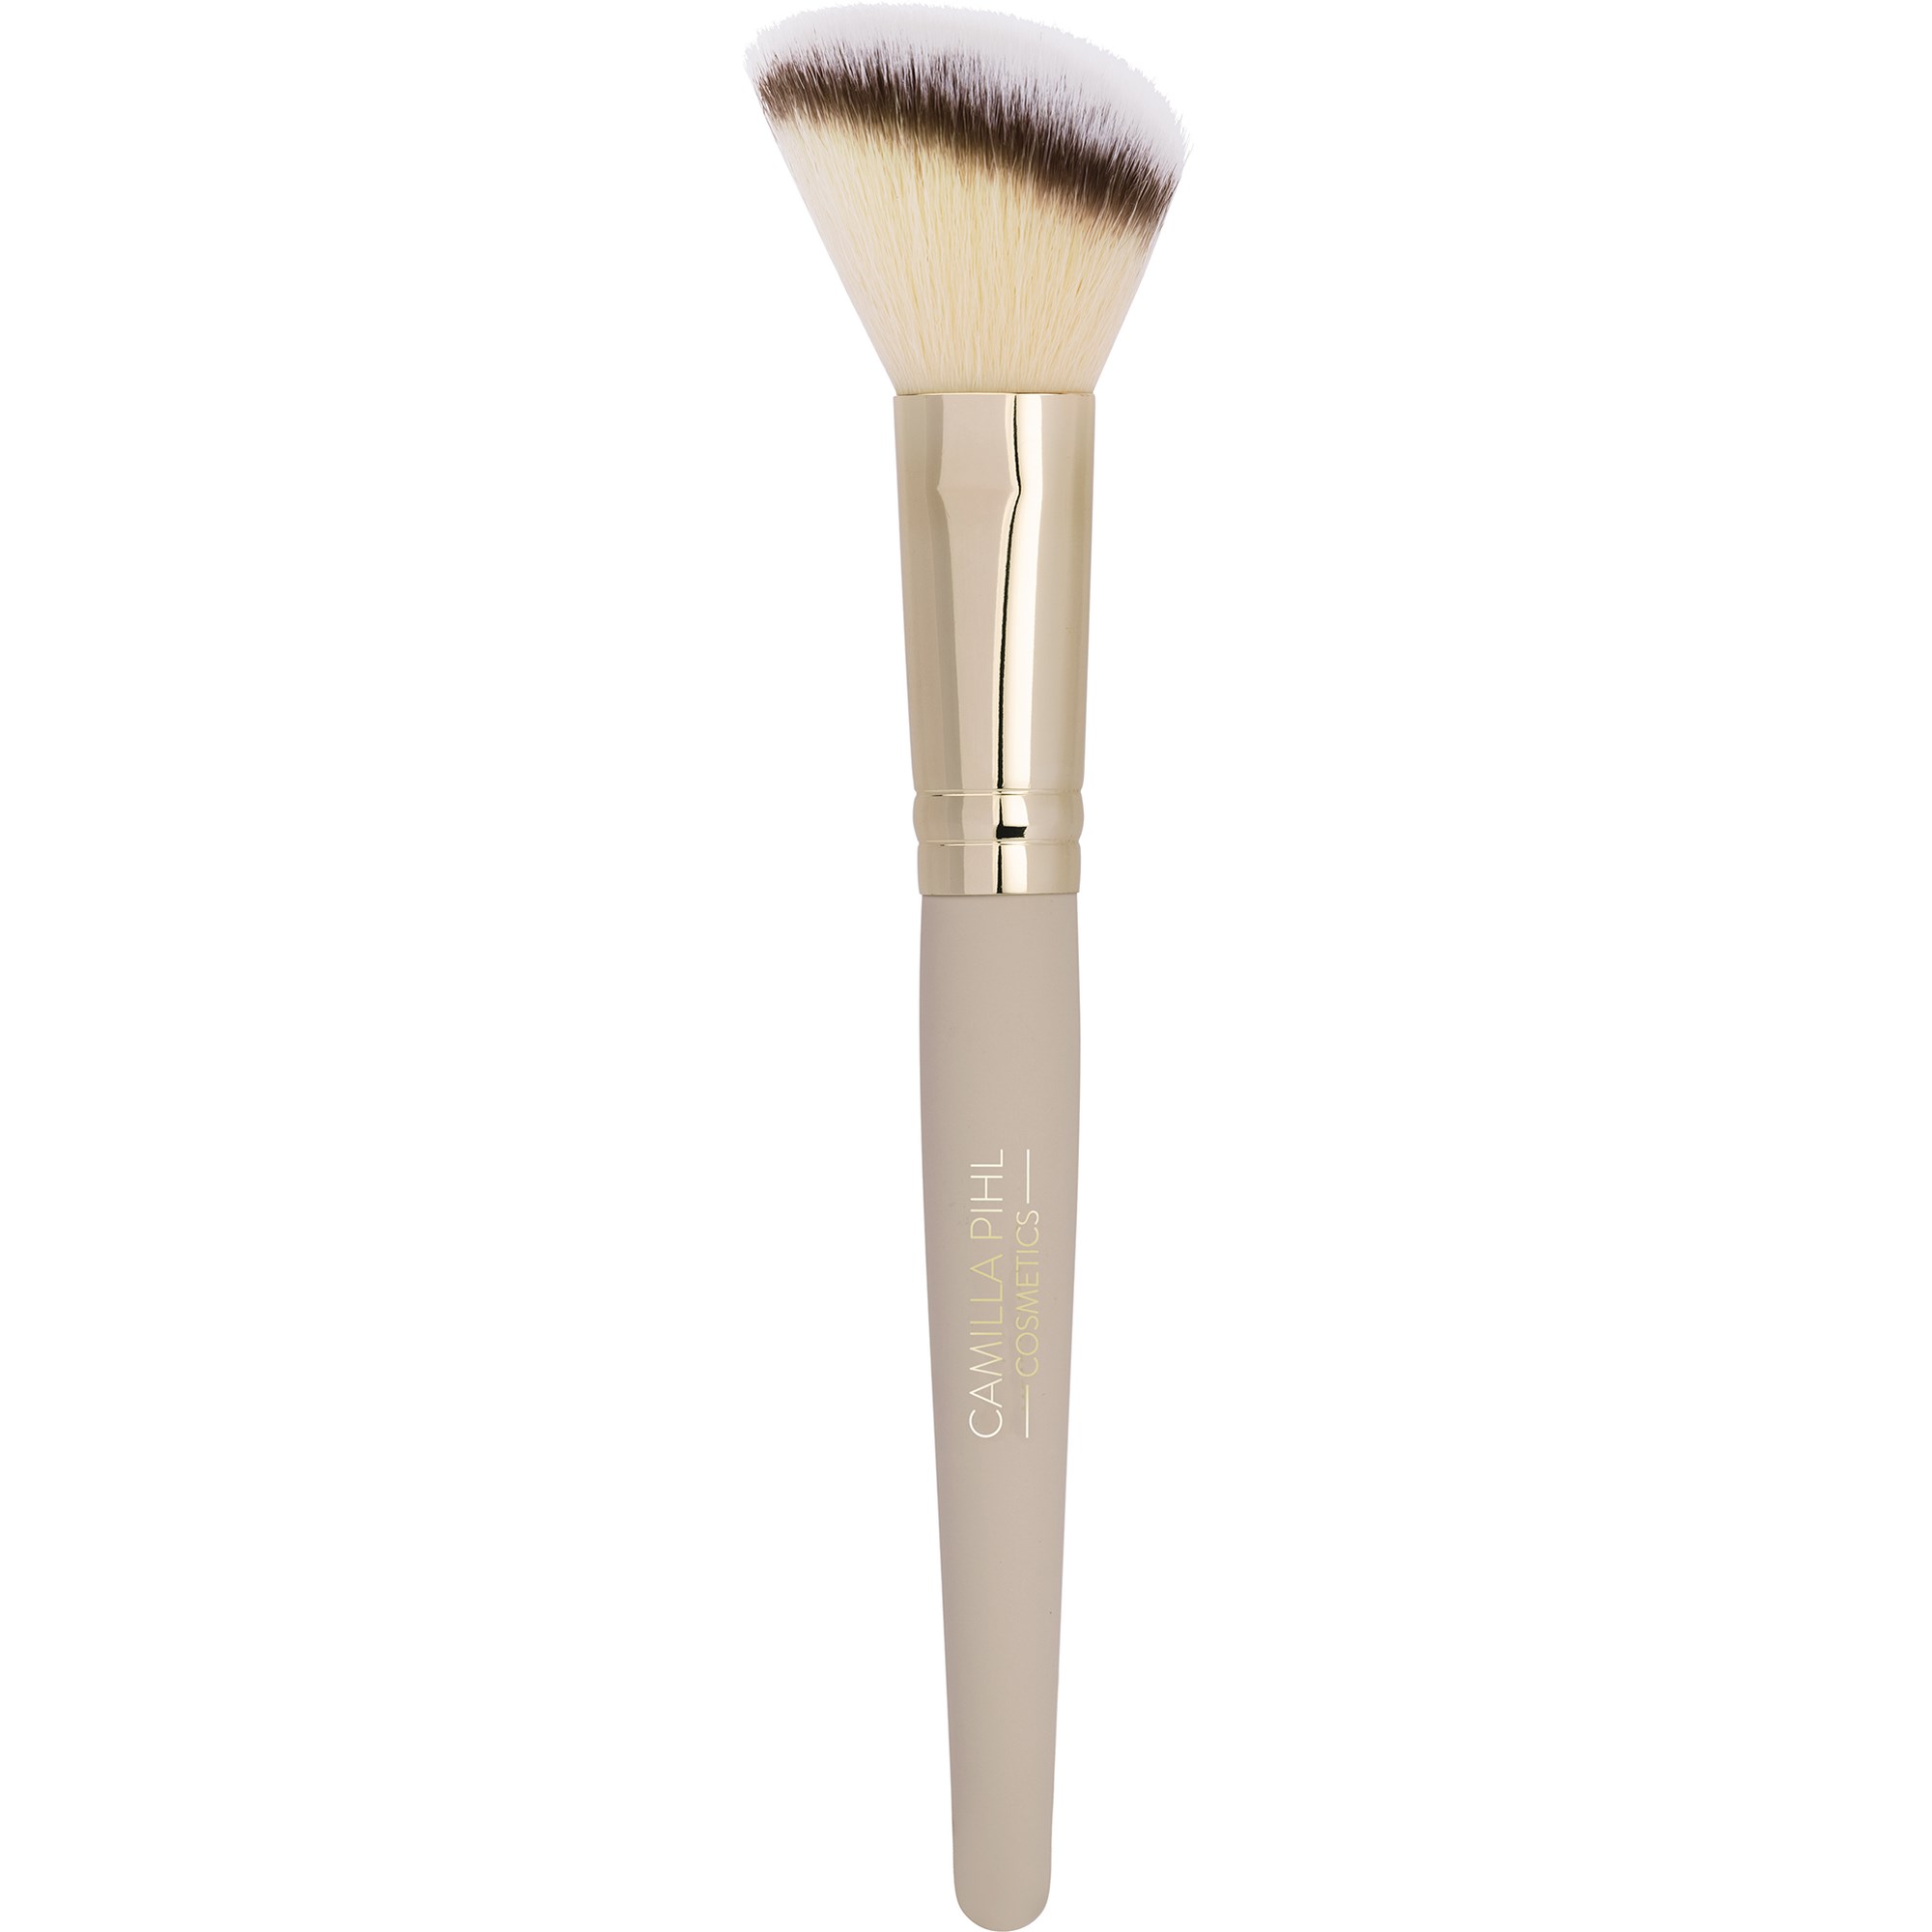 Bilde av Camilla Pihl Cosmetics Brush #1 Angeled Brush